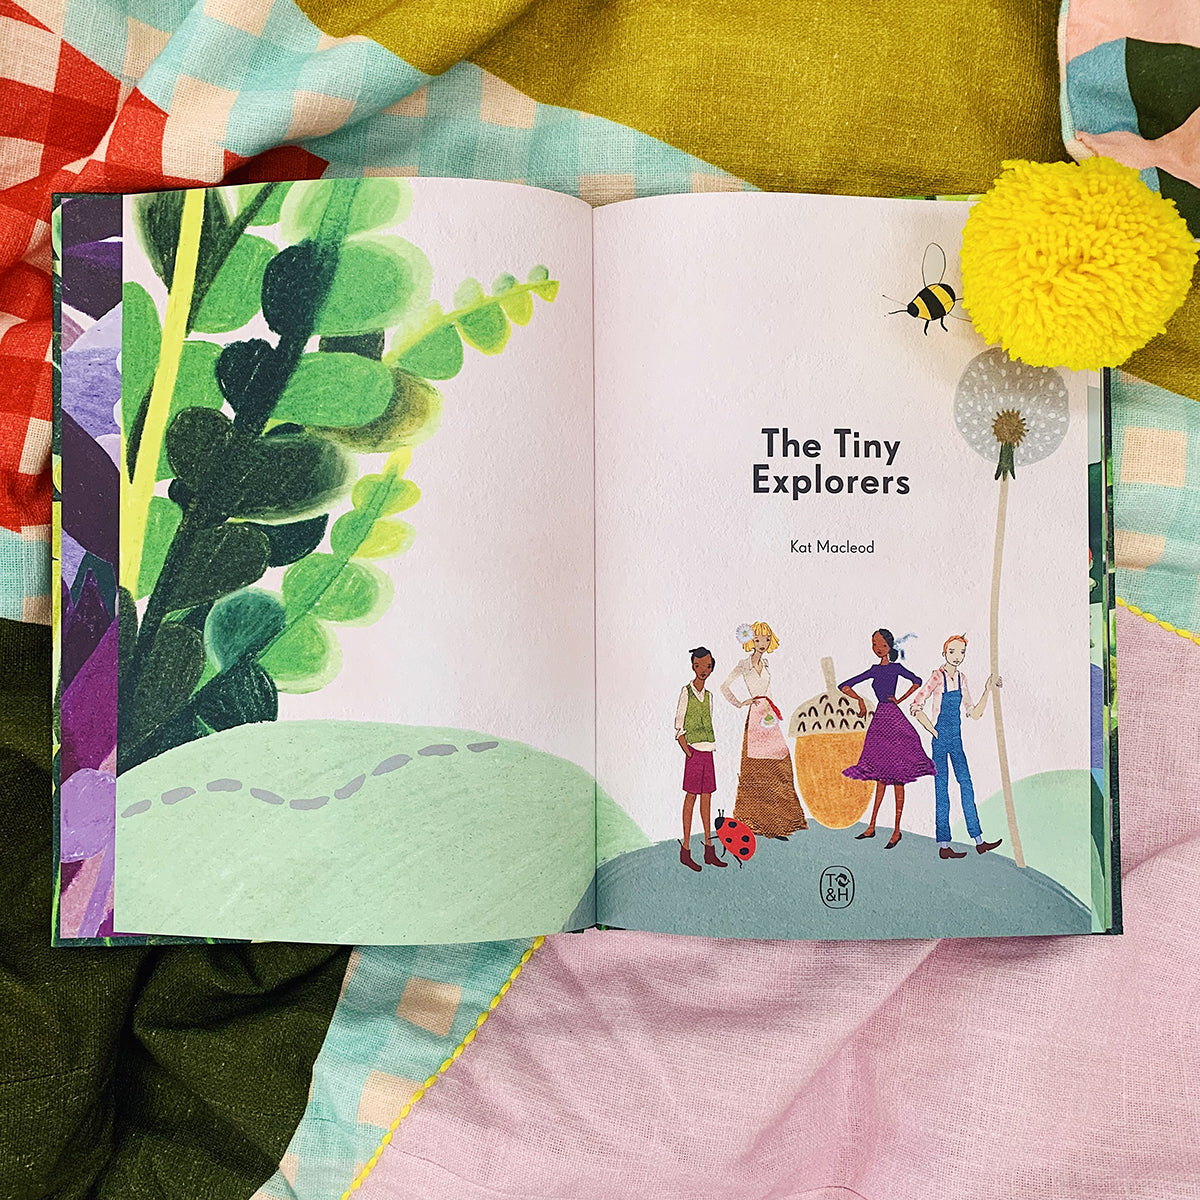 The Tiny Explorers book by Kat Macleod